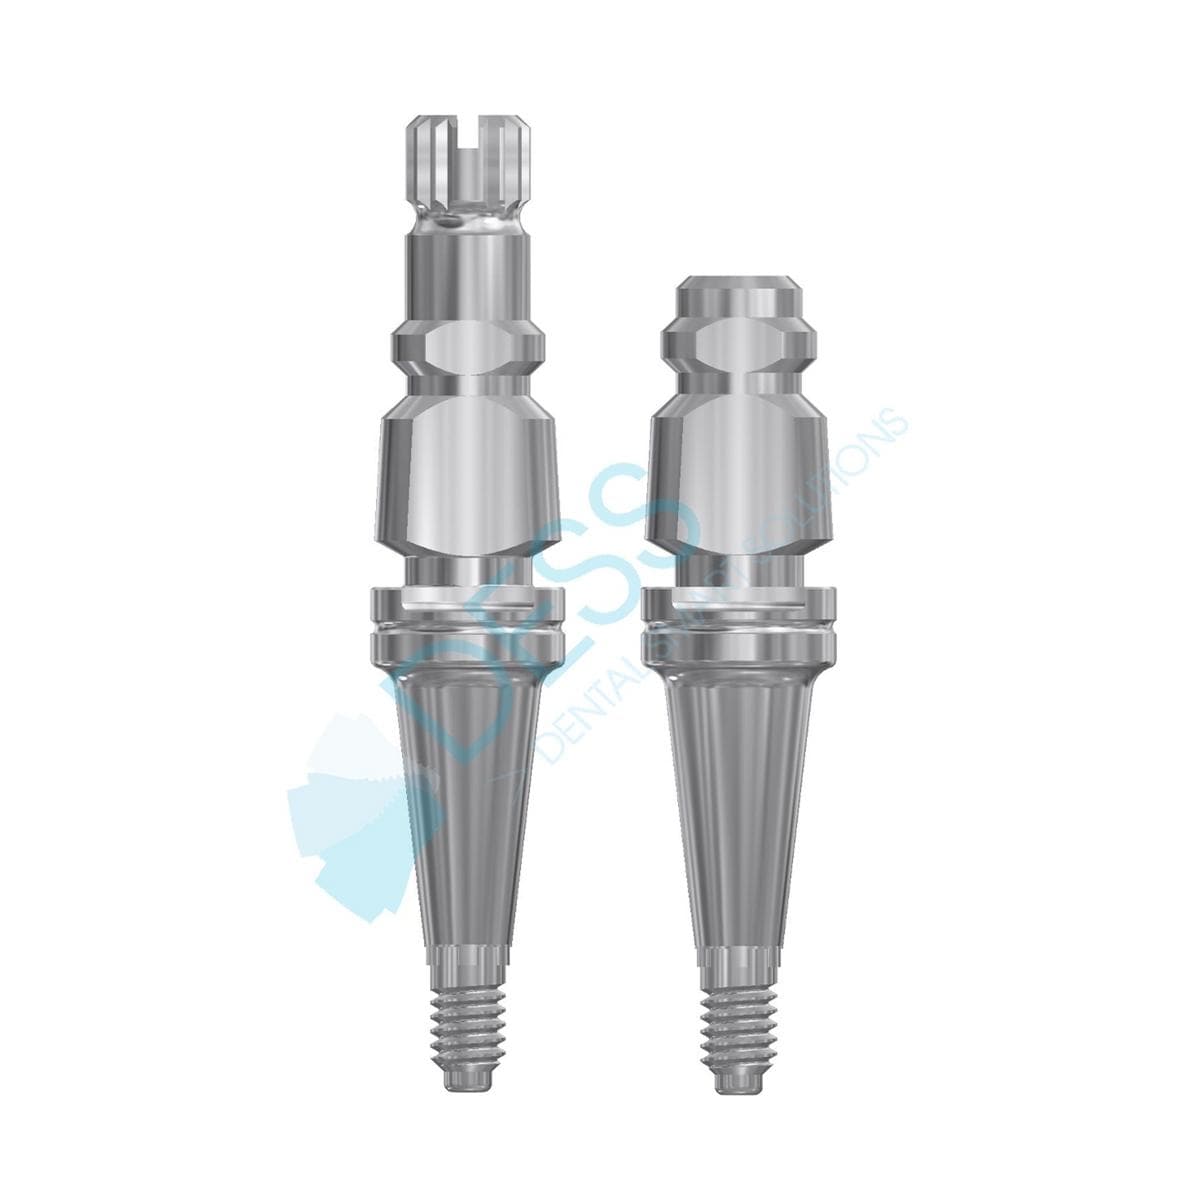 Abformpfosten - kompatibel mit Dentsply Ankylos® - Höhe 2,0 - 3,0 mm, mit Rotationsschutz